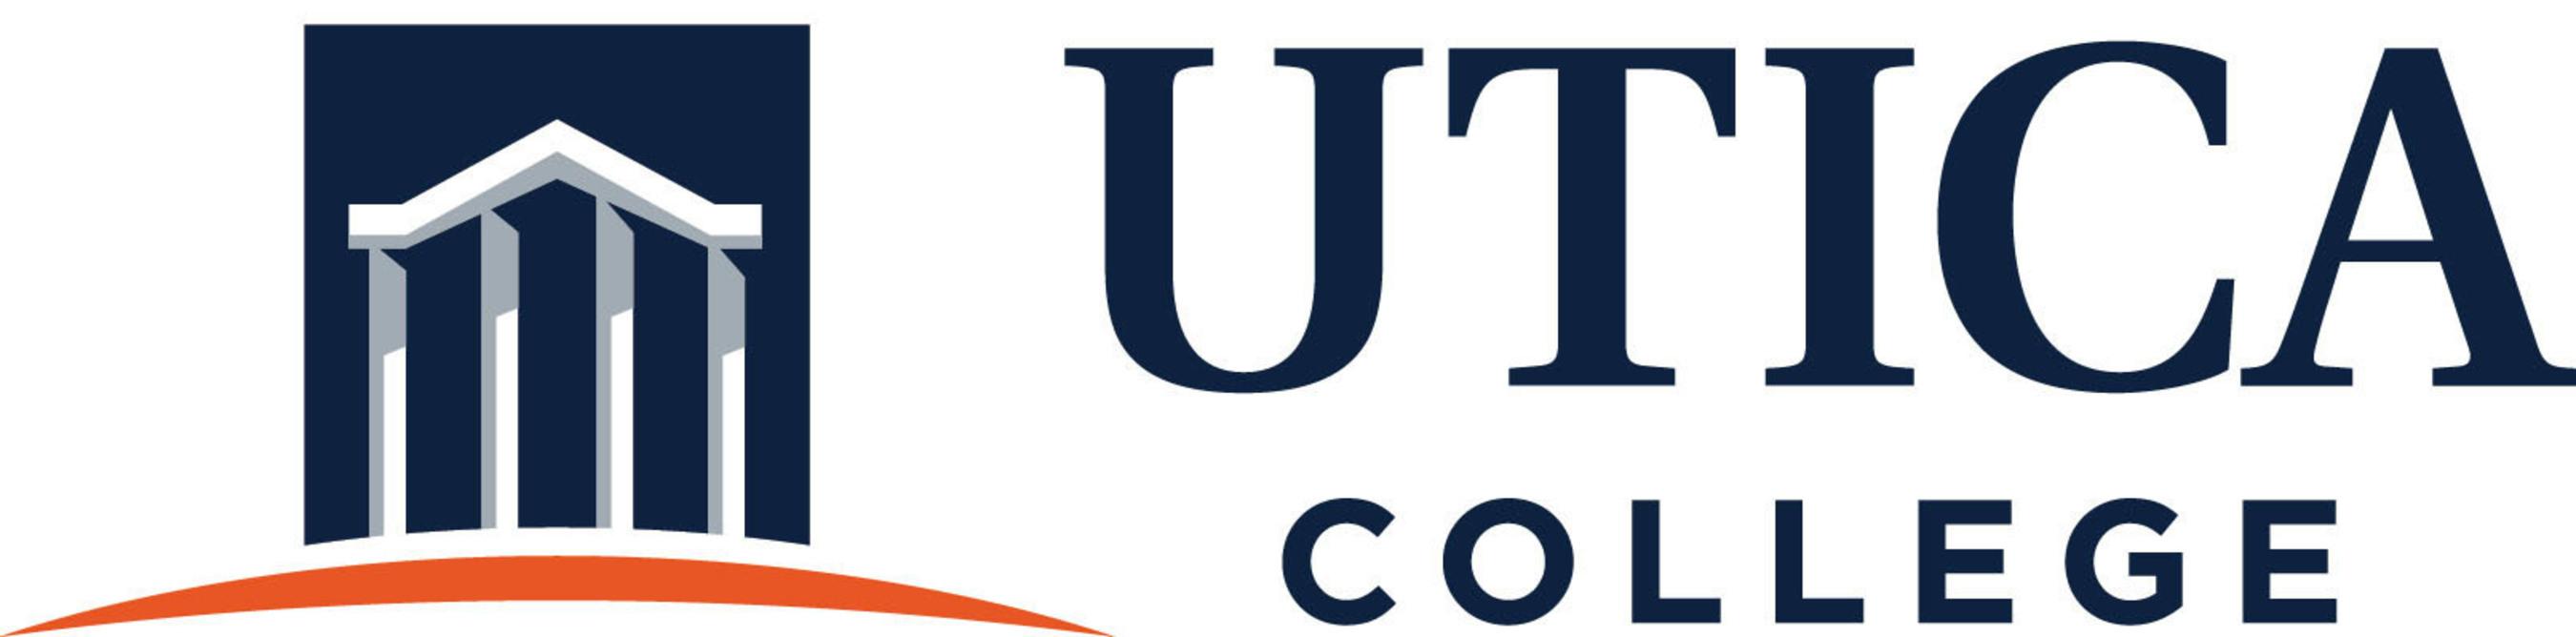 Utica Logo - UTICA COLLEGE LOGO | The Project Fibonacci® Foundation Inc.